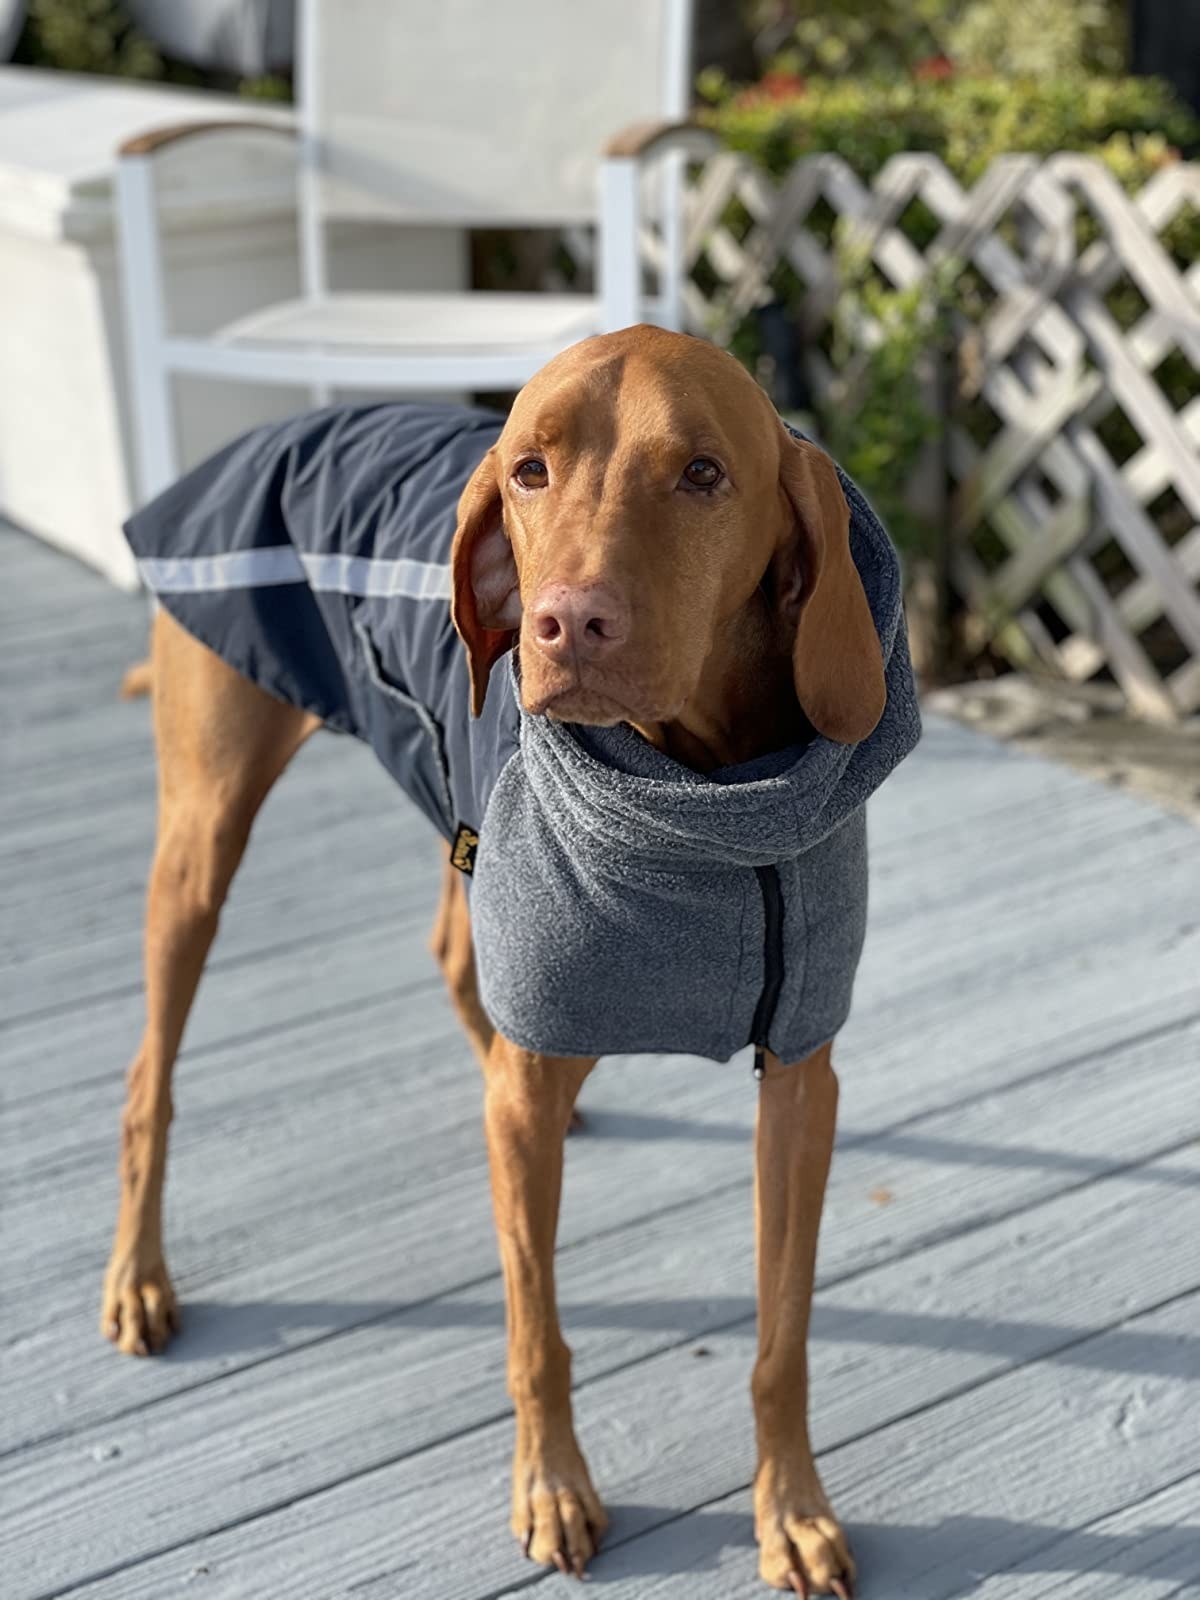 Red Fleece Lined Jacket Reflective Dog Jacket Warm Dog Coat Climate Changer Fleece Jacket Easy On and Off Size XL Dog Coat 100% Waterproof Nylon